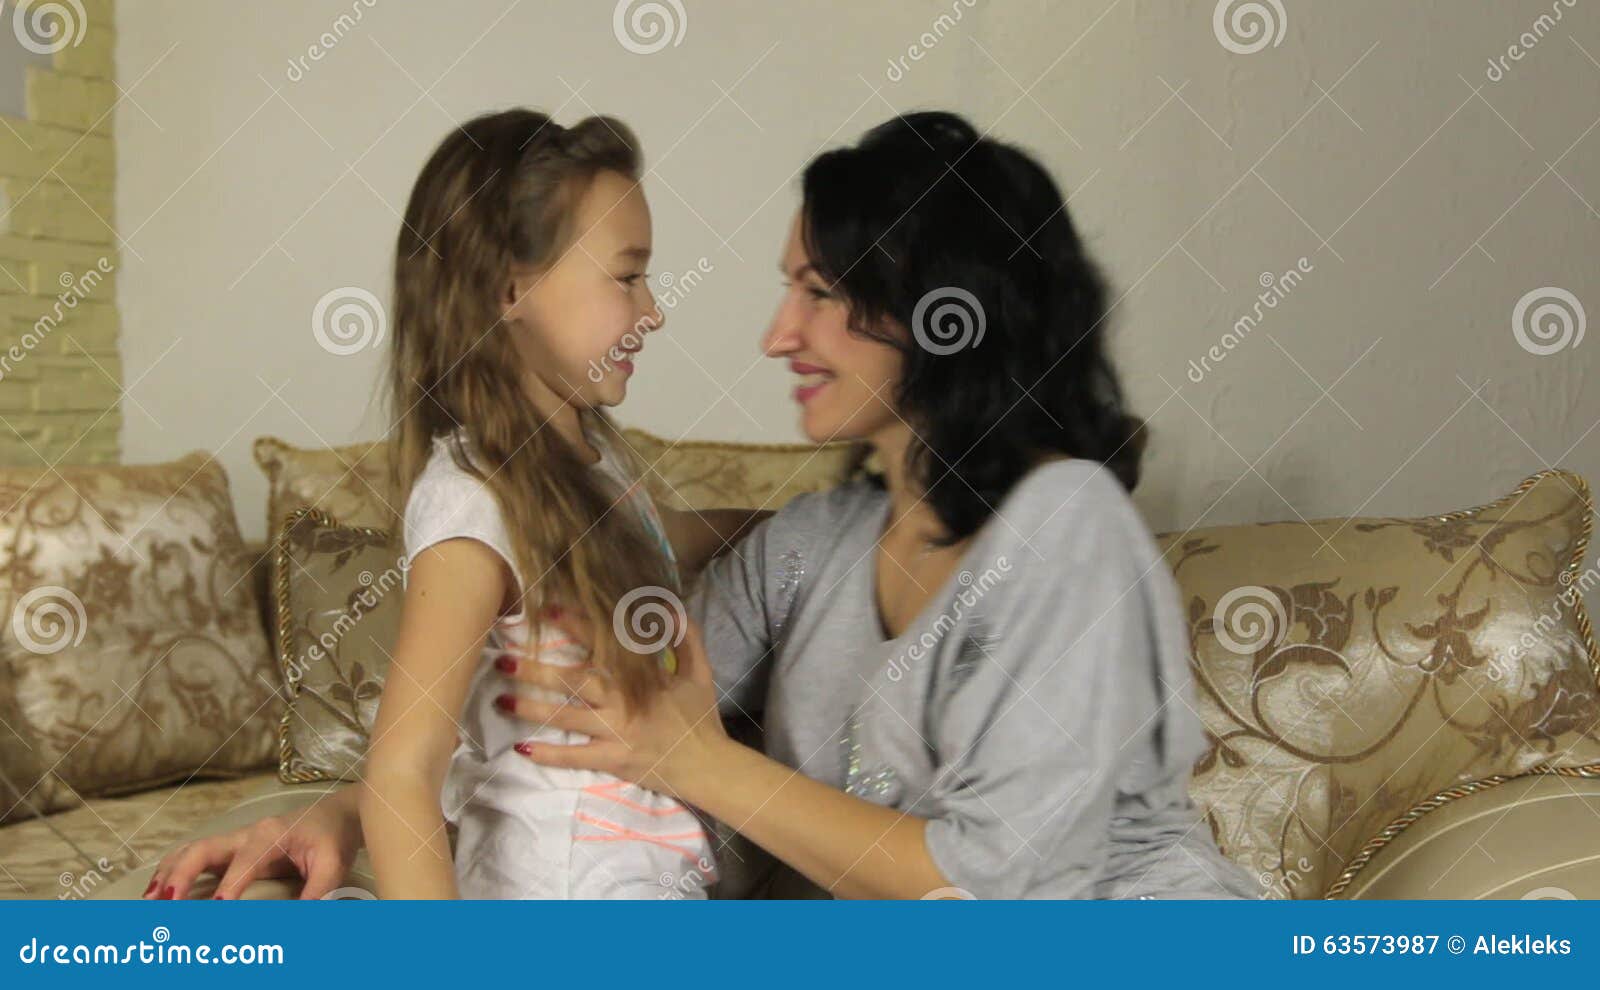 christian kavanaugh add photo lesbian mom daughter videos